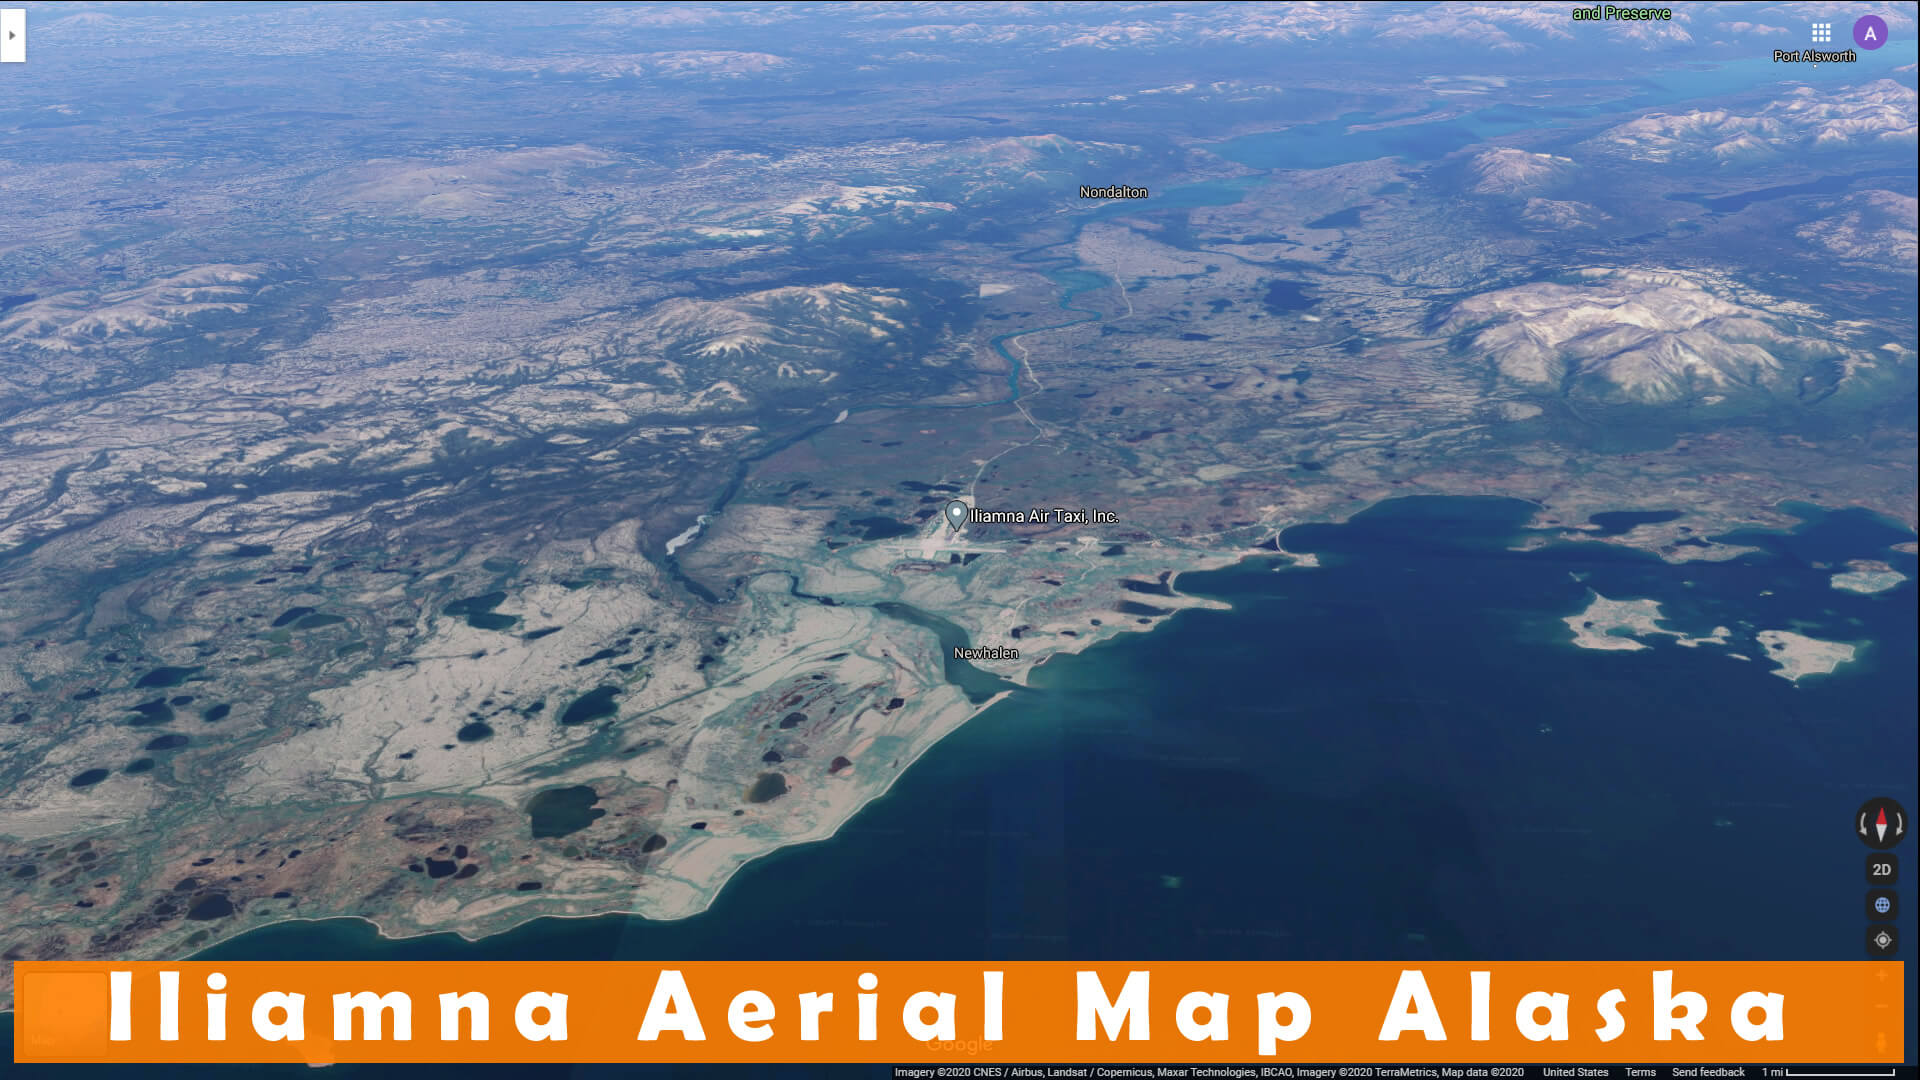 Iliamna Aerial Map Alaska